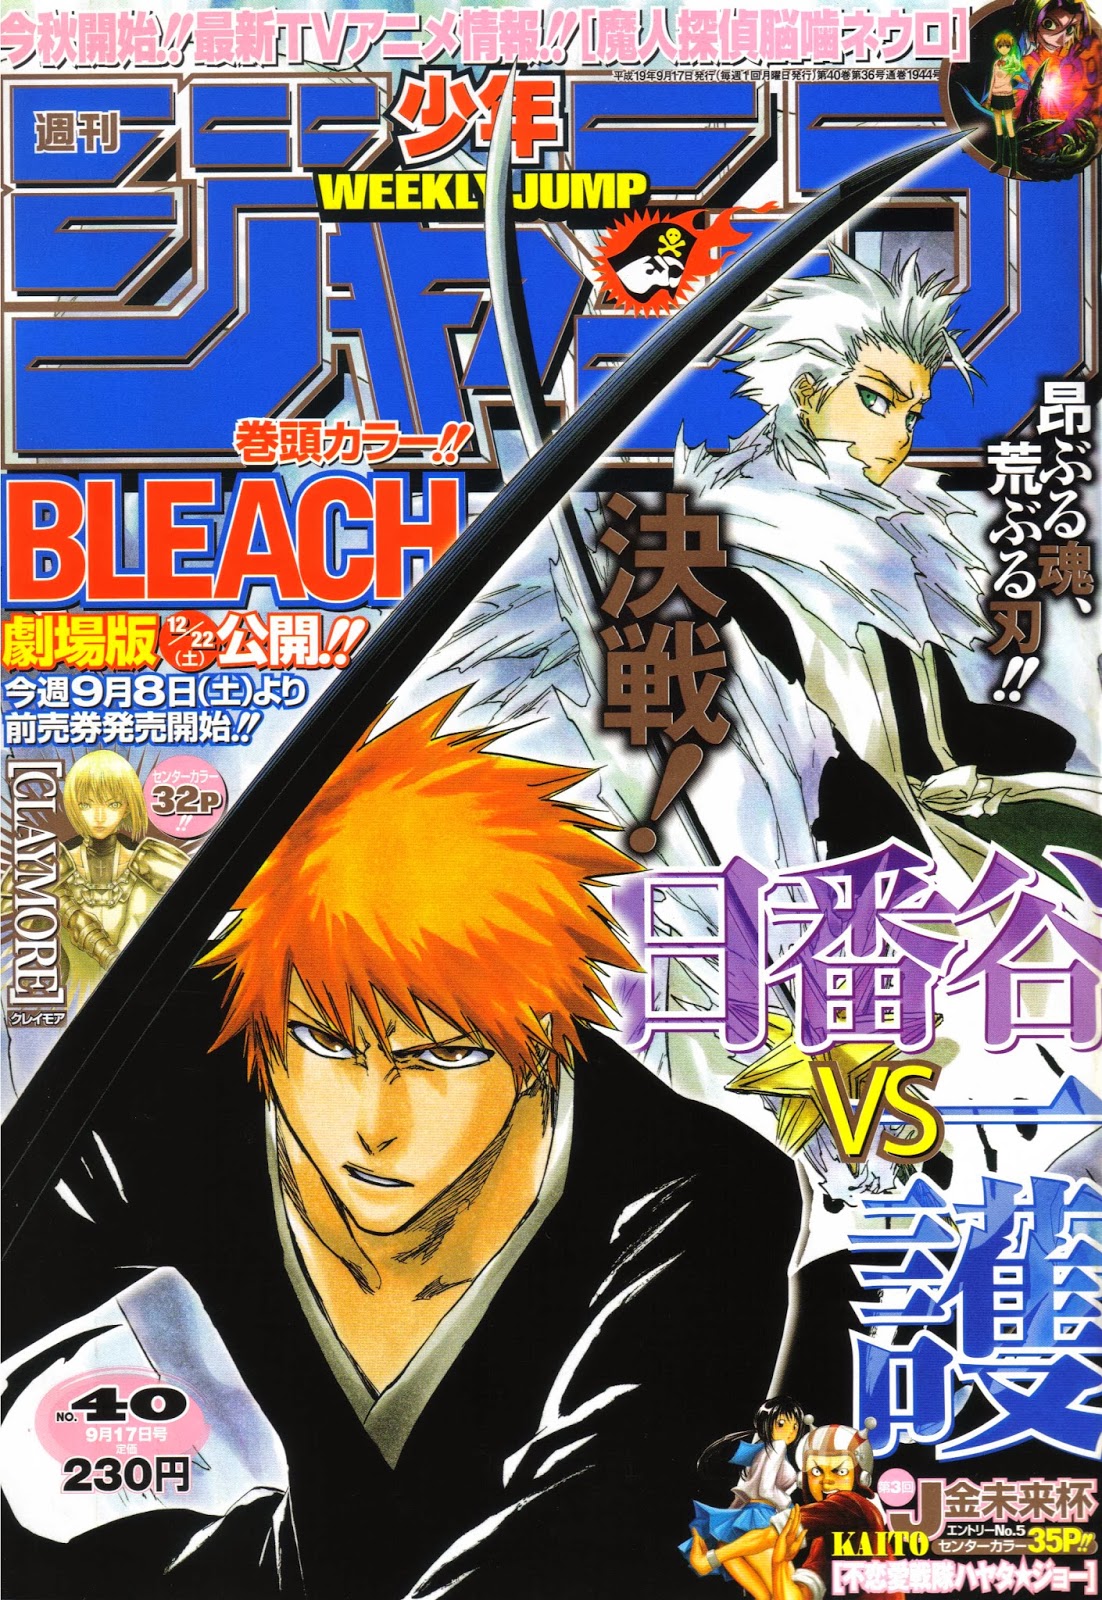 Bleach - Vol. 7 (DVD, 2007) Shonen Jump Episodes 25-28 ANIME DVD VIZ NTSC  782009238522